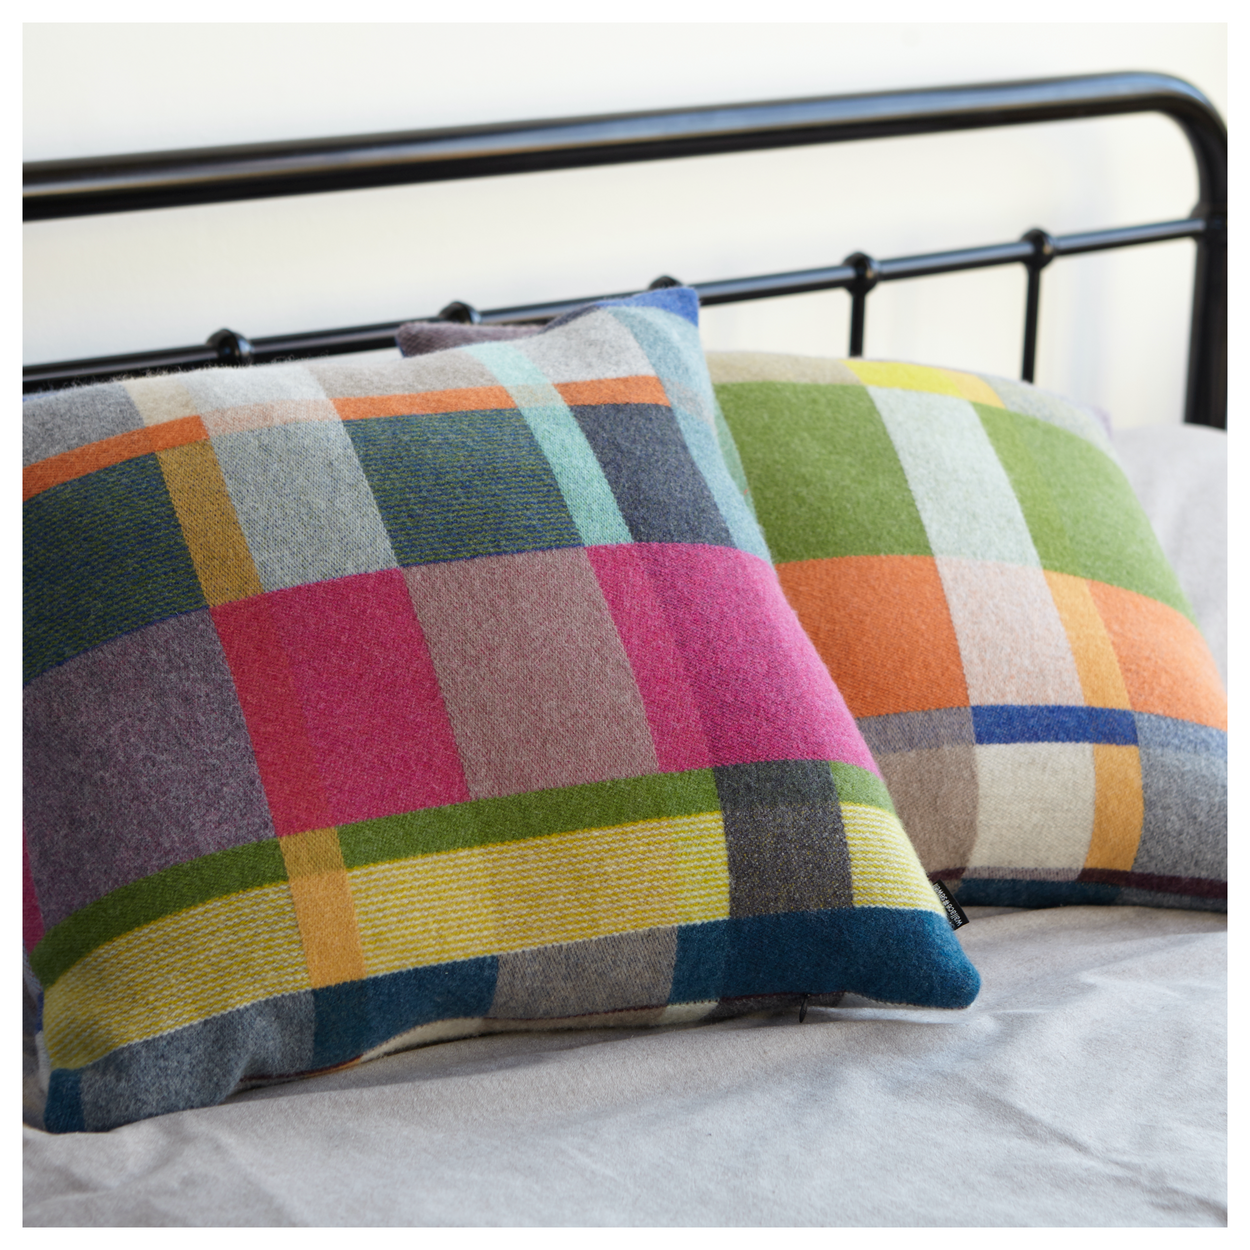 Two Premium Australian Merino Wool Cushion cover - Gwynne stuffed, on iron bed.